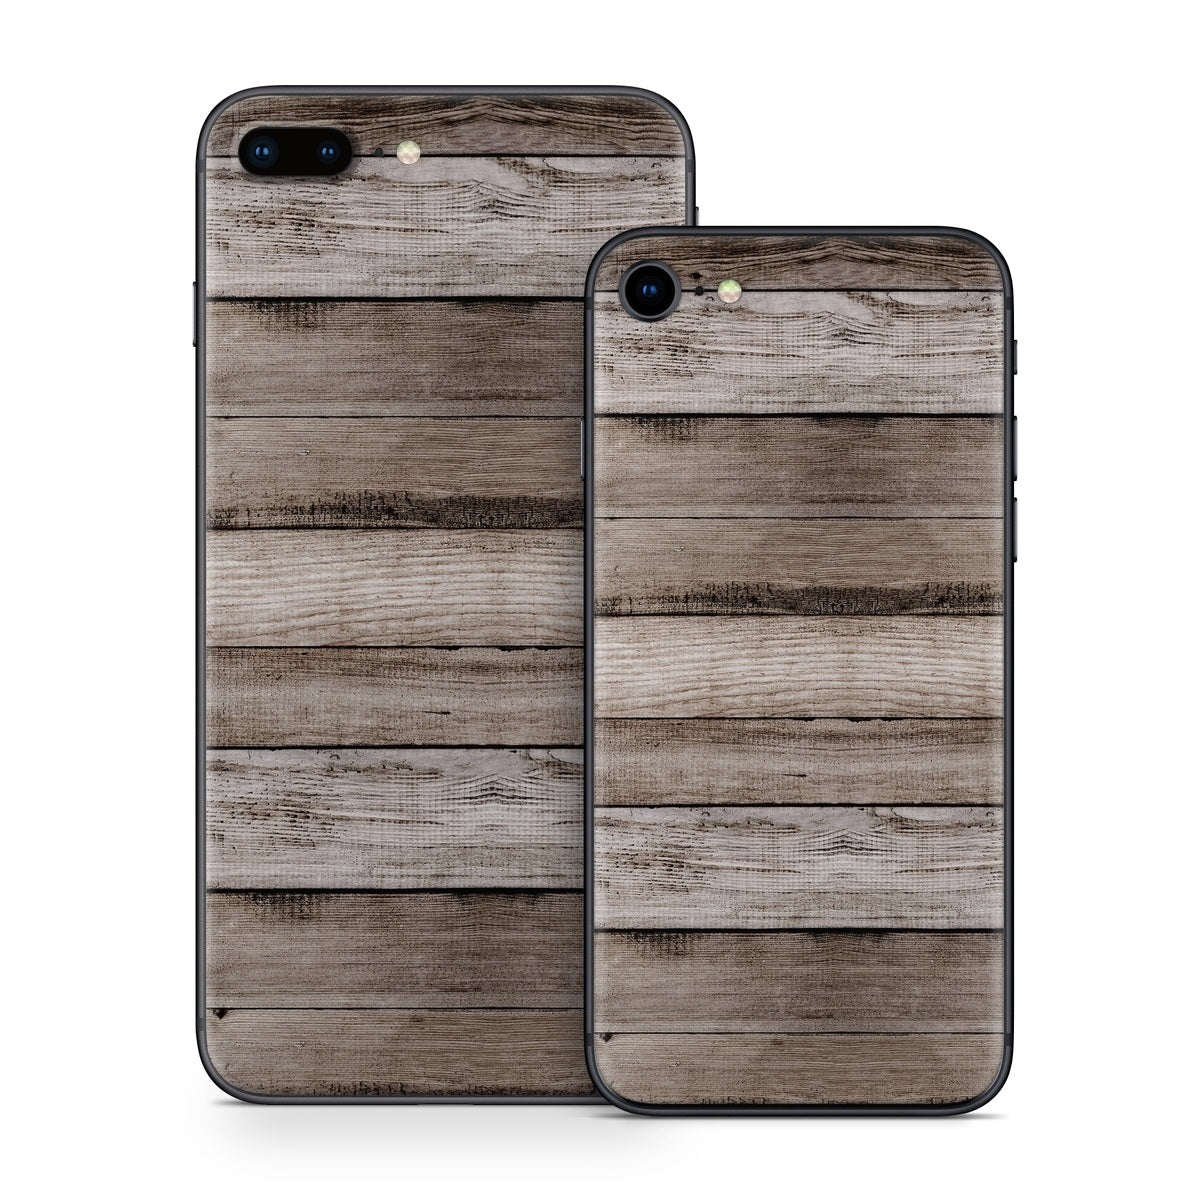 Barn Wood - Apple iPhone 8 Skin - Reclaimed Woods - DecalGirl